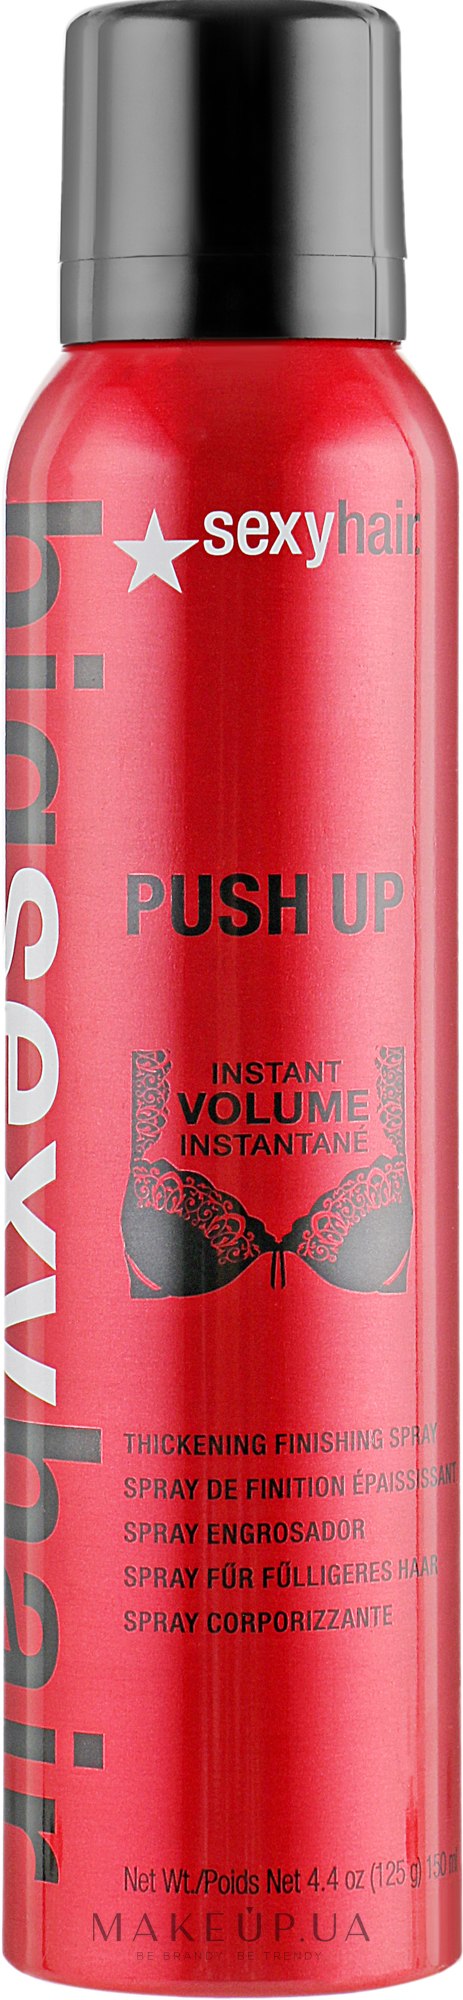 Big Push Up Spray - SexyHair